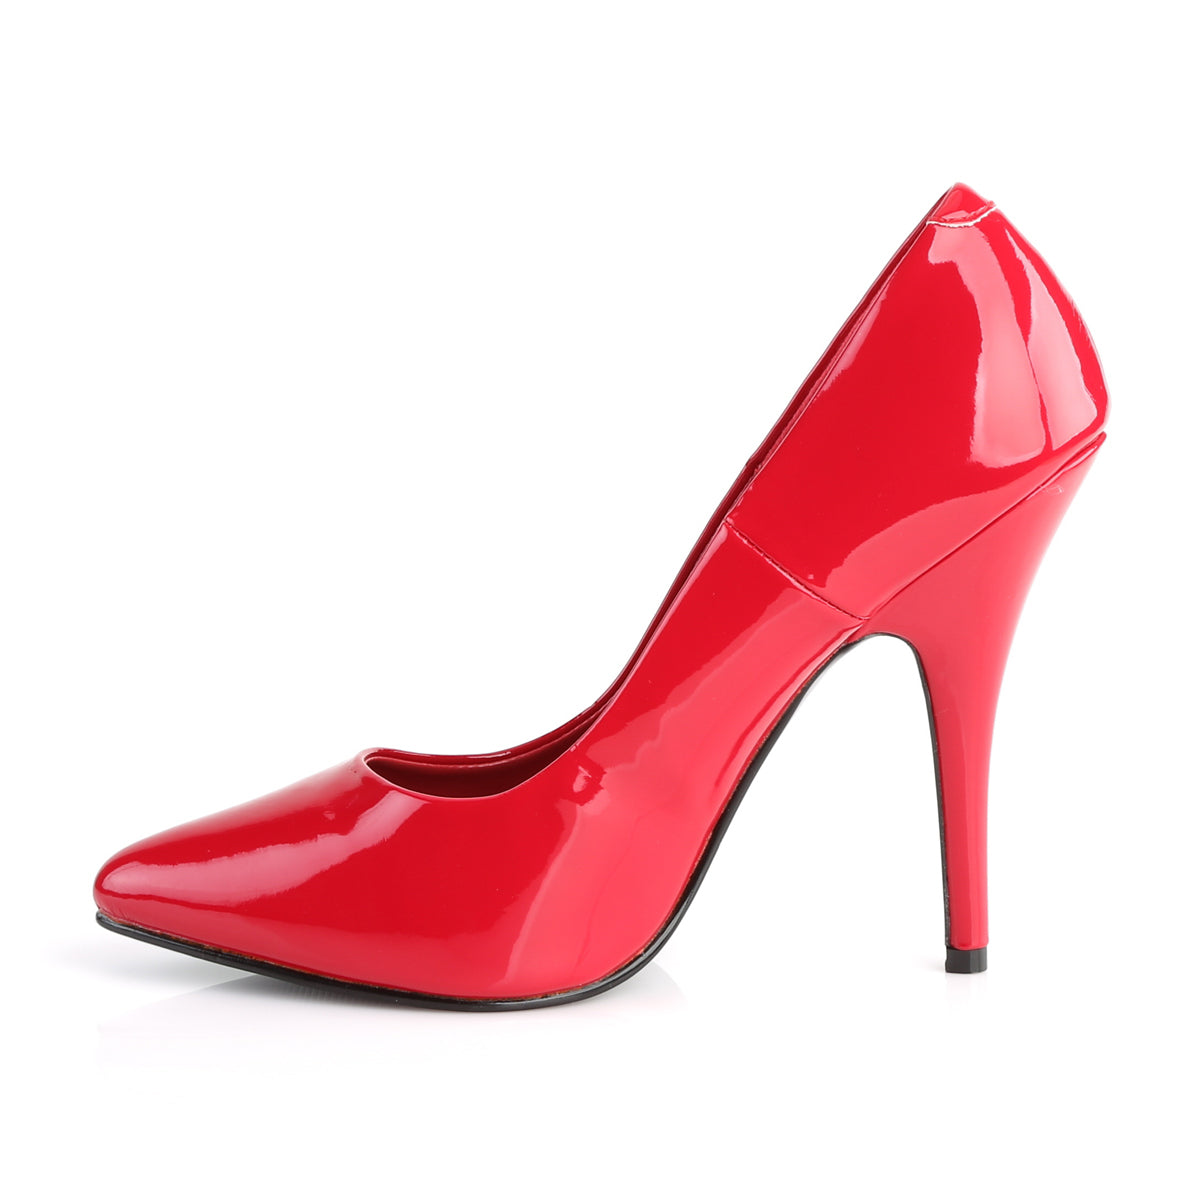 SEDUCE-420 Pleaser Sexy Shoe 5 Inch Heel Red Fetish Footwear-Pleaser- Sexy Shoes Pole Dance Heels